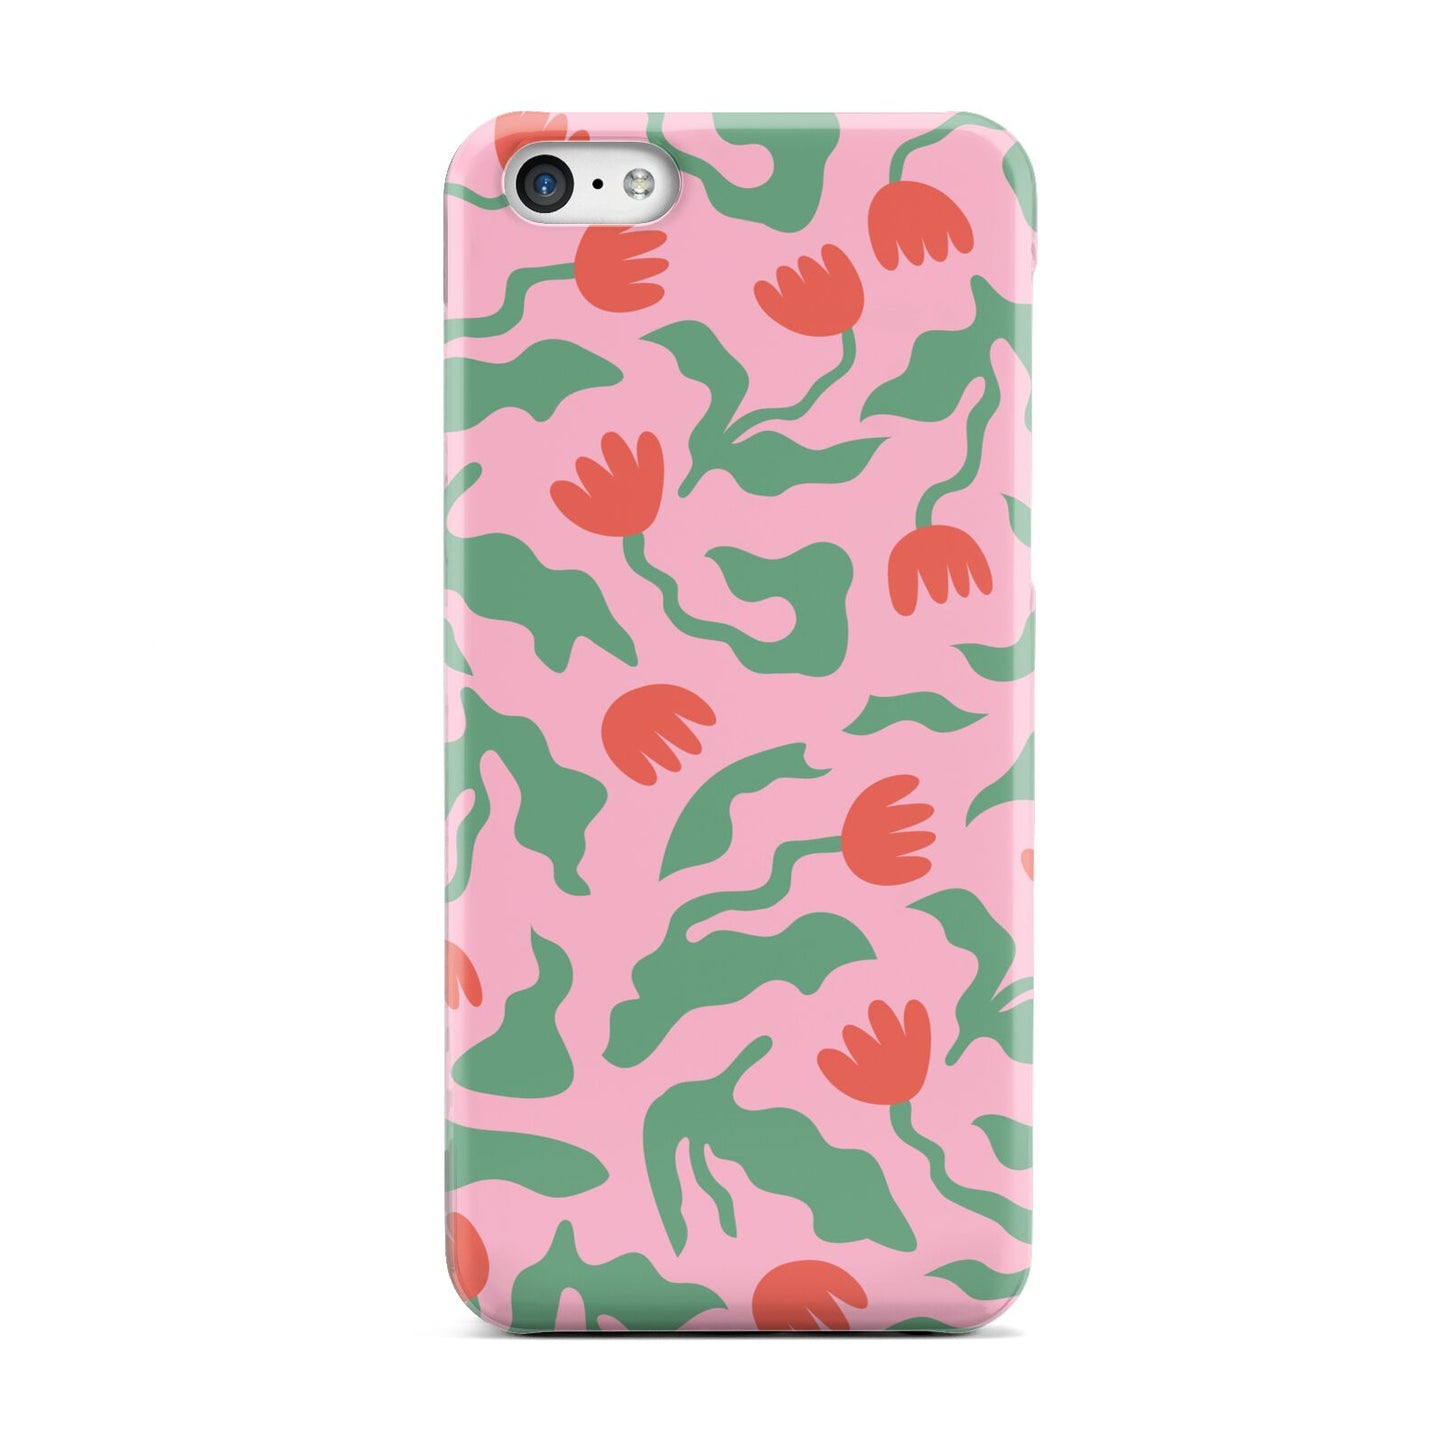 Simple Floral Apple iPhone 5c Case